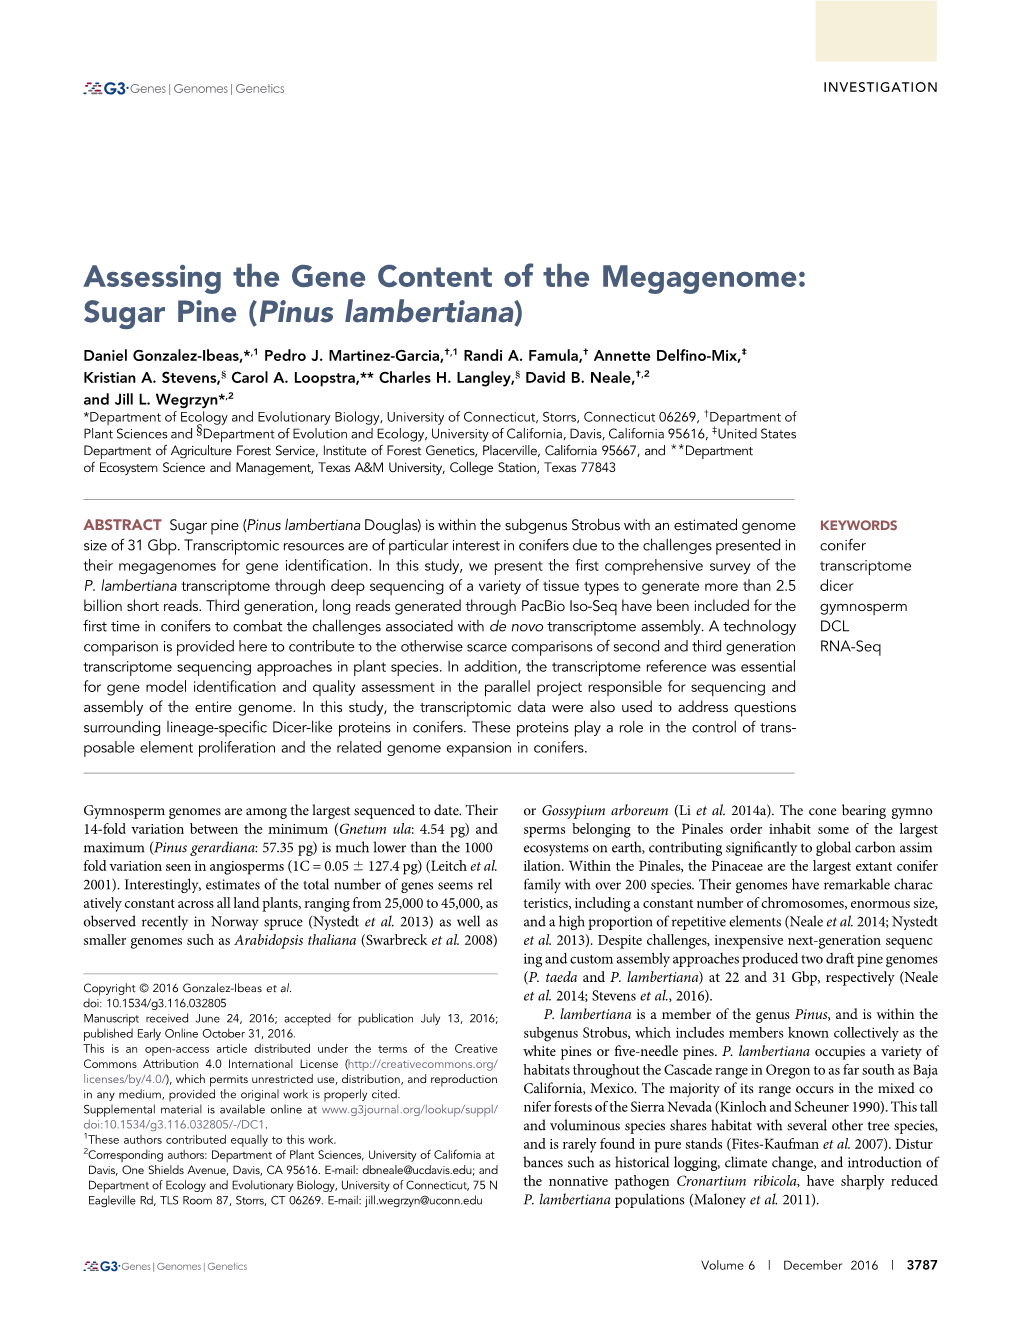 Assessing the Gene Content of the Megagenome: Sugar Pine (Pinus Lambertiana)